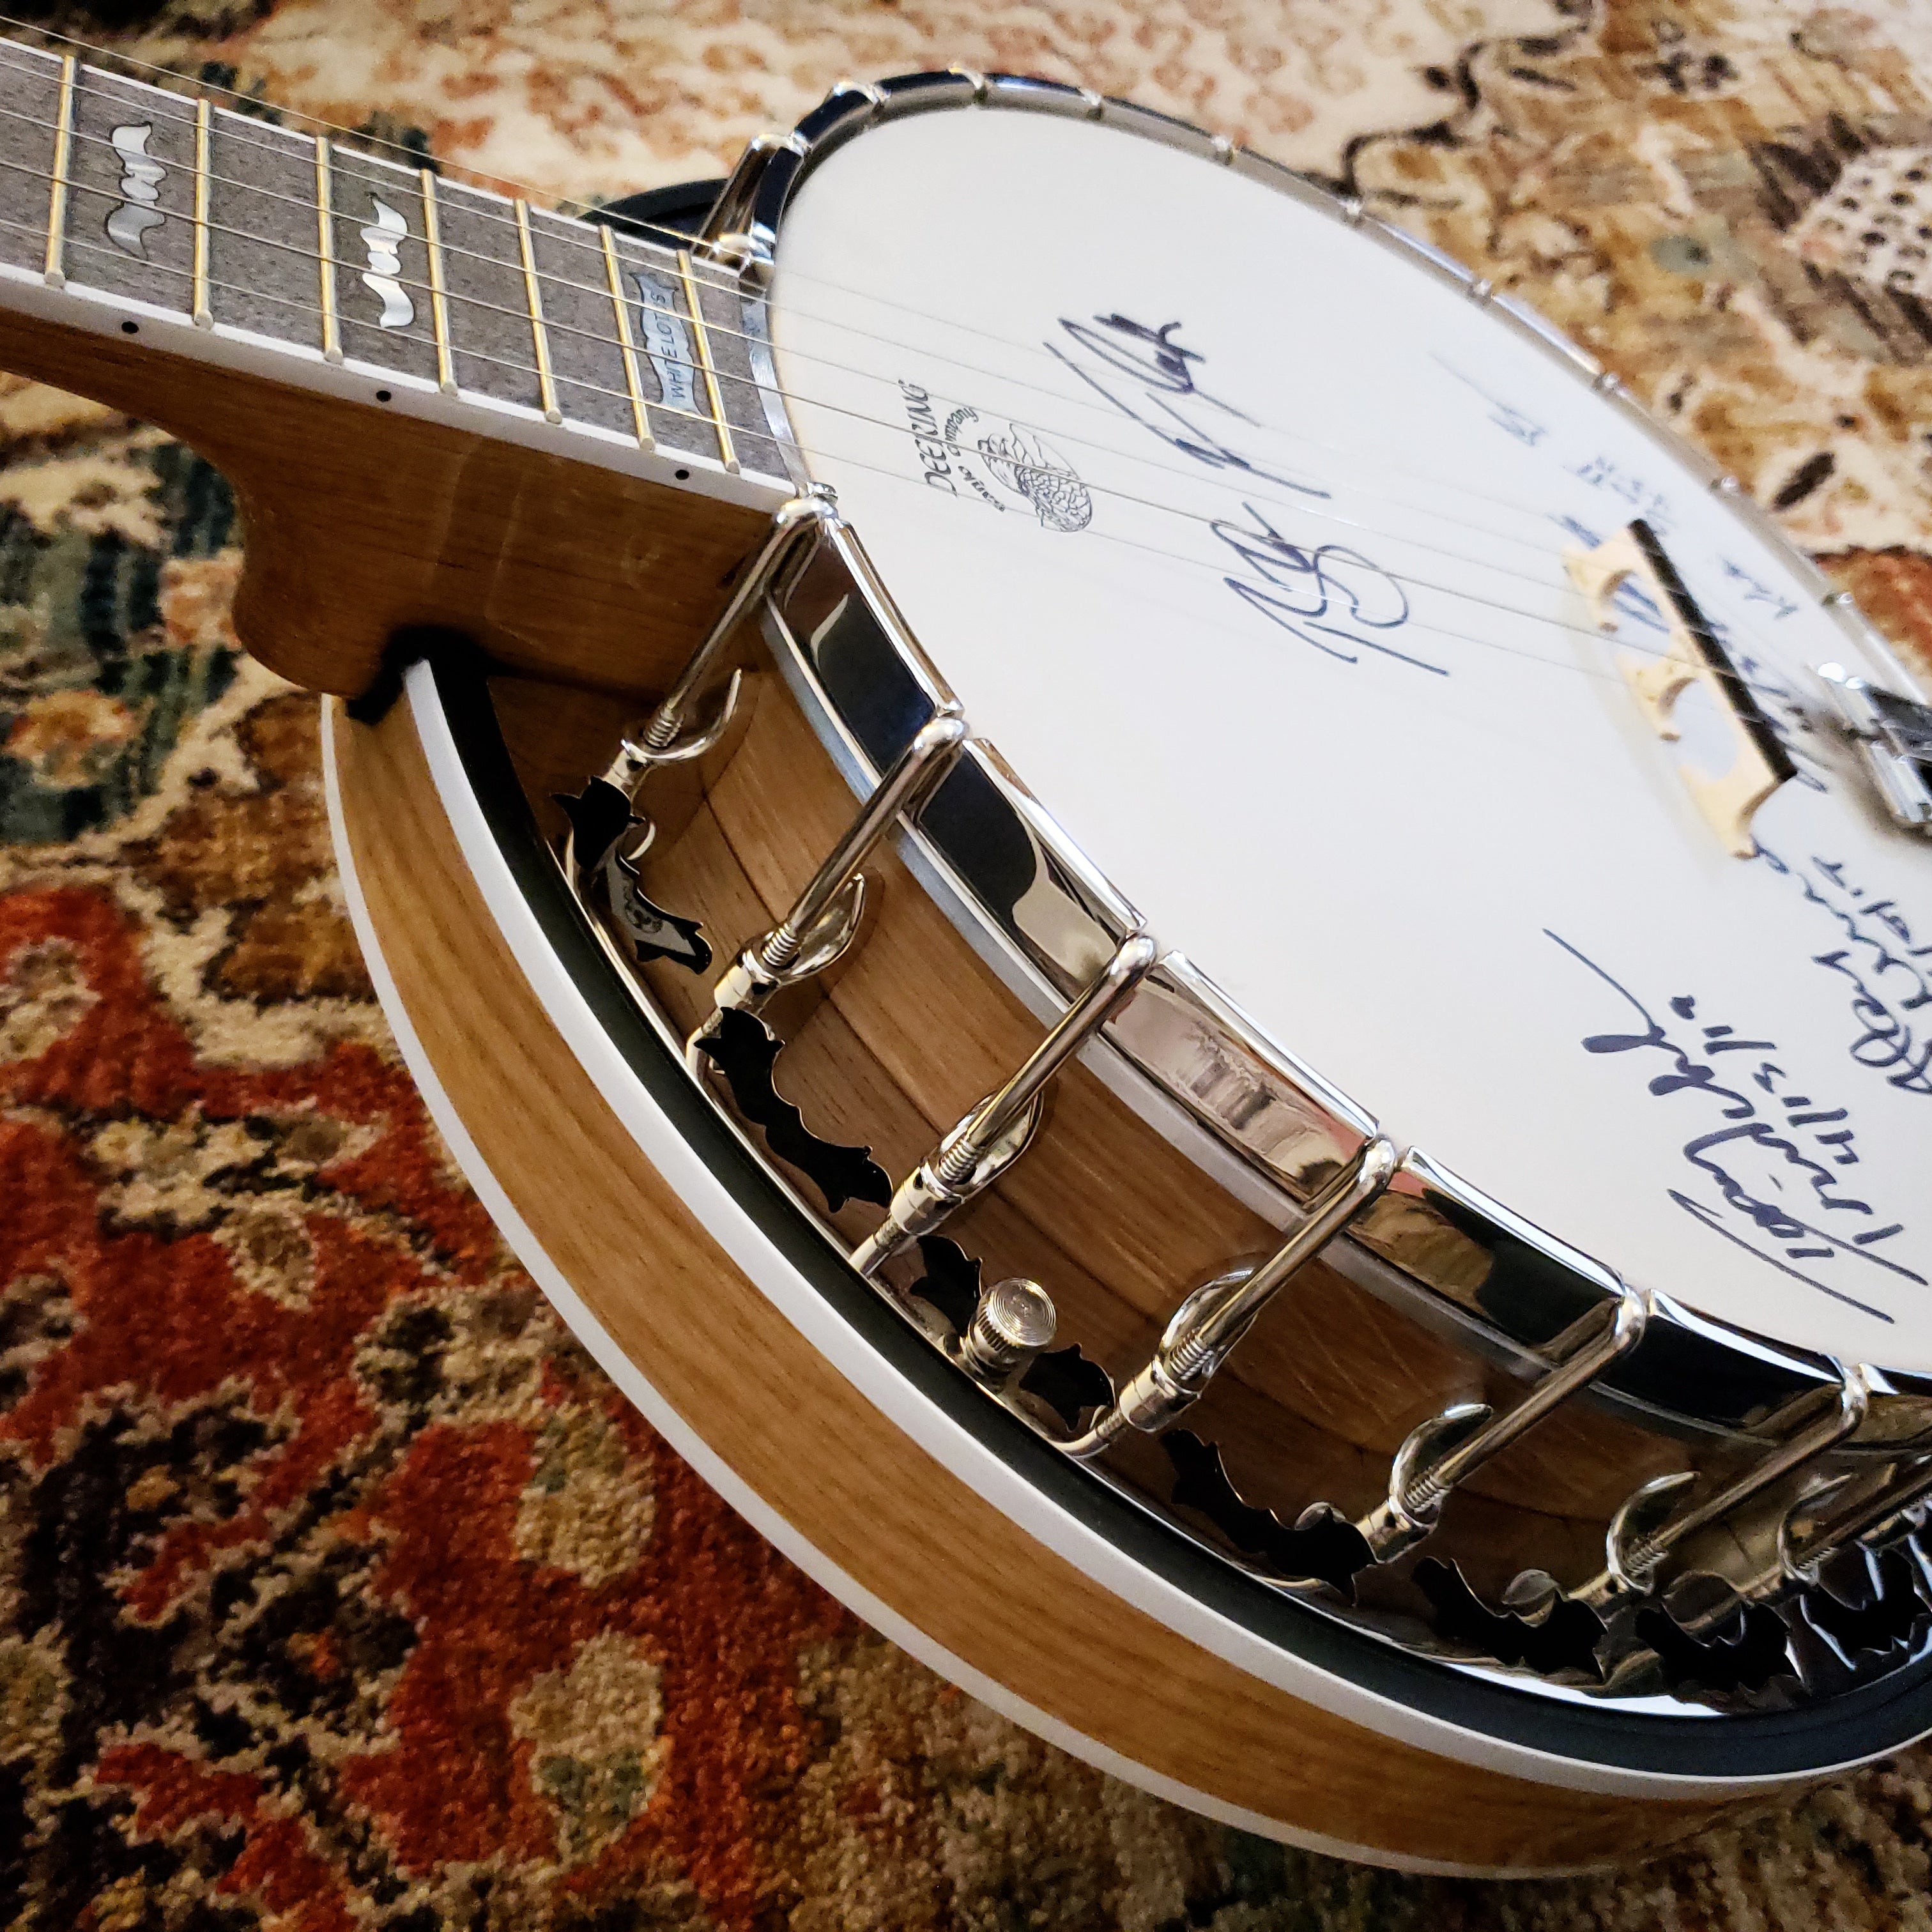 Deering White Lotus Banjo Auction - Signed by 2019 Blue Ridge Banjo Camp Instructors!